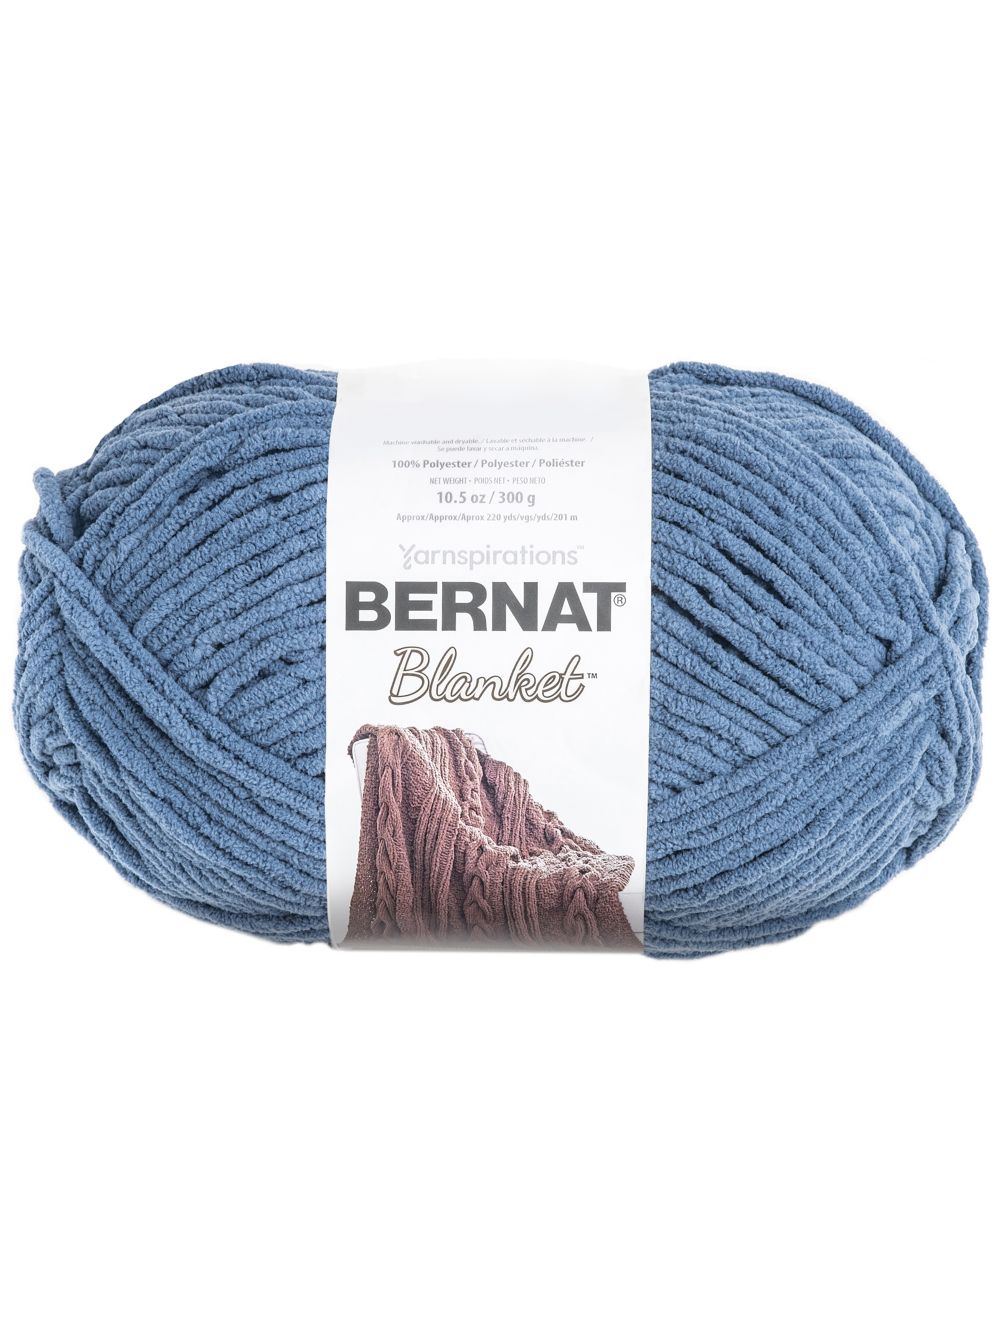 Spinrite Bernat Blanket Big Ball Yarn, Teal, 10.5 oz